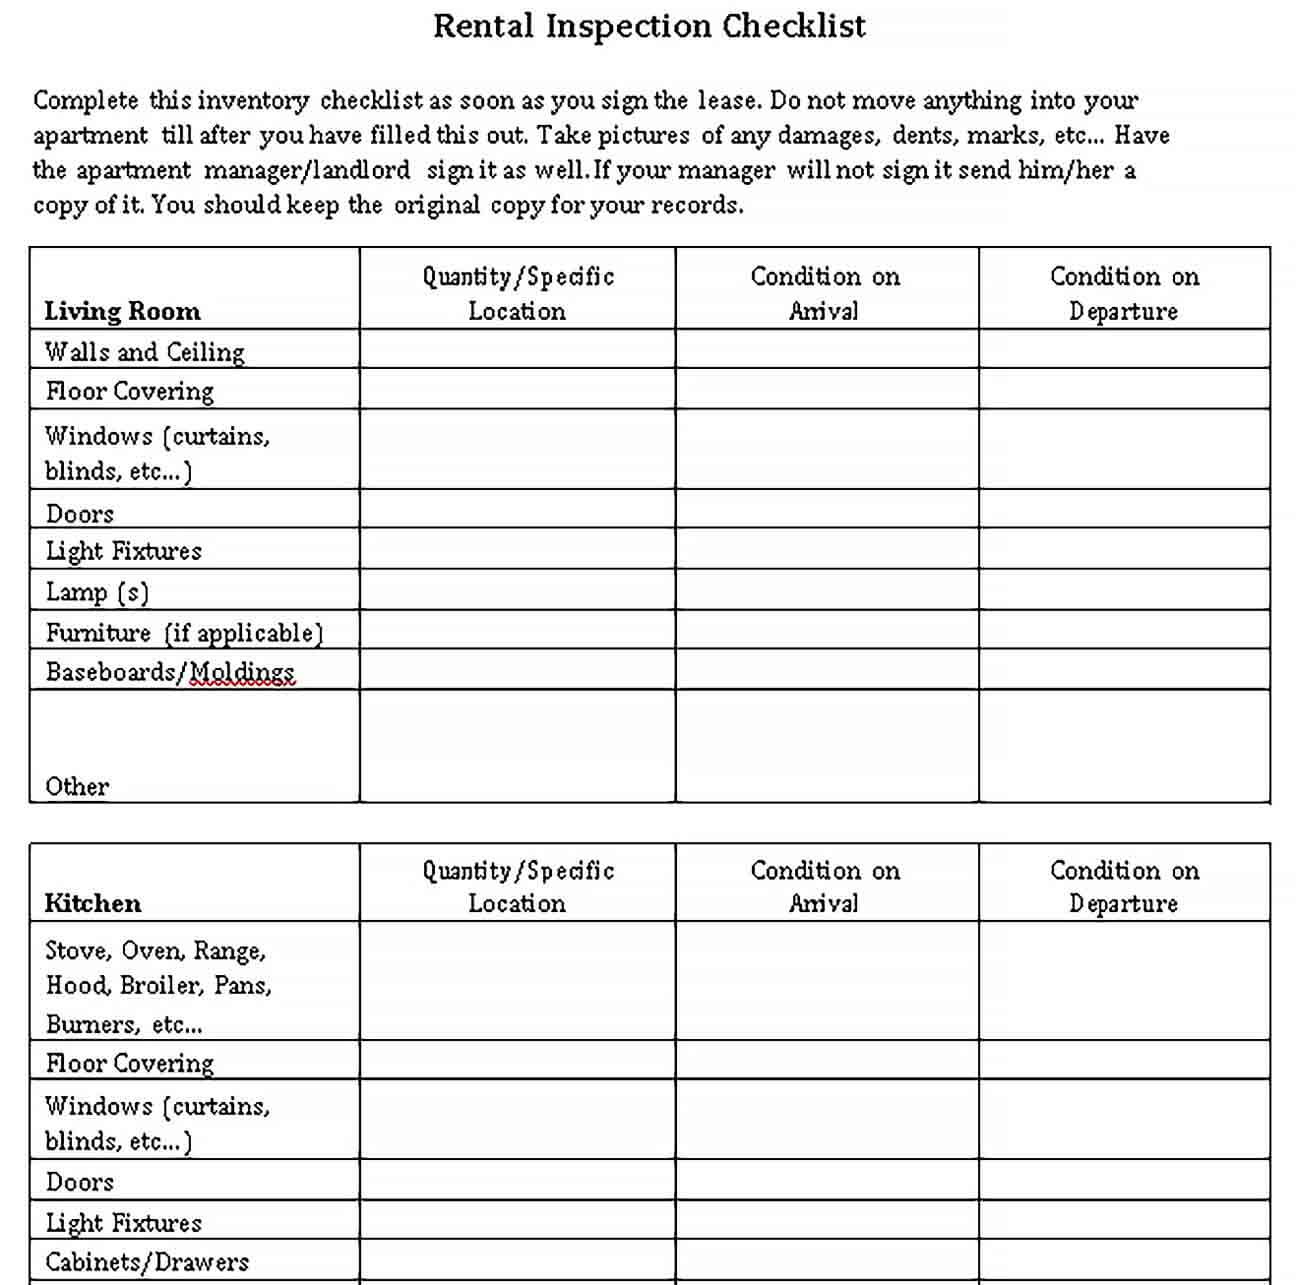 Sample Rental House Inspection Checklist